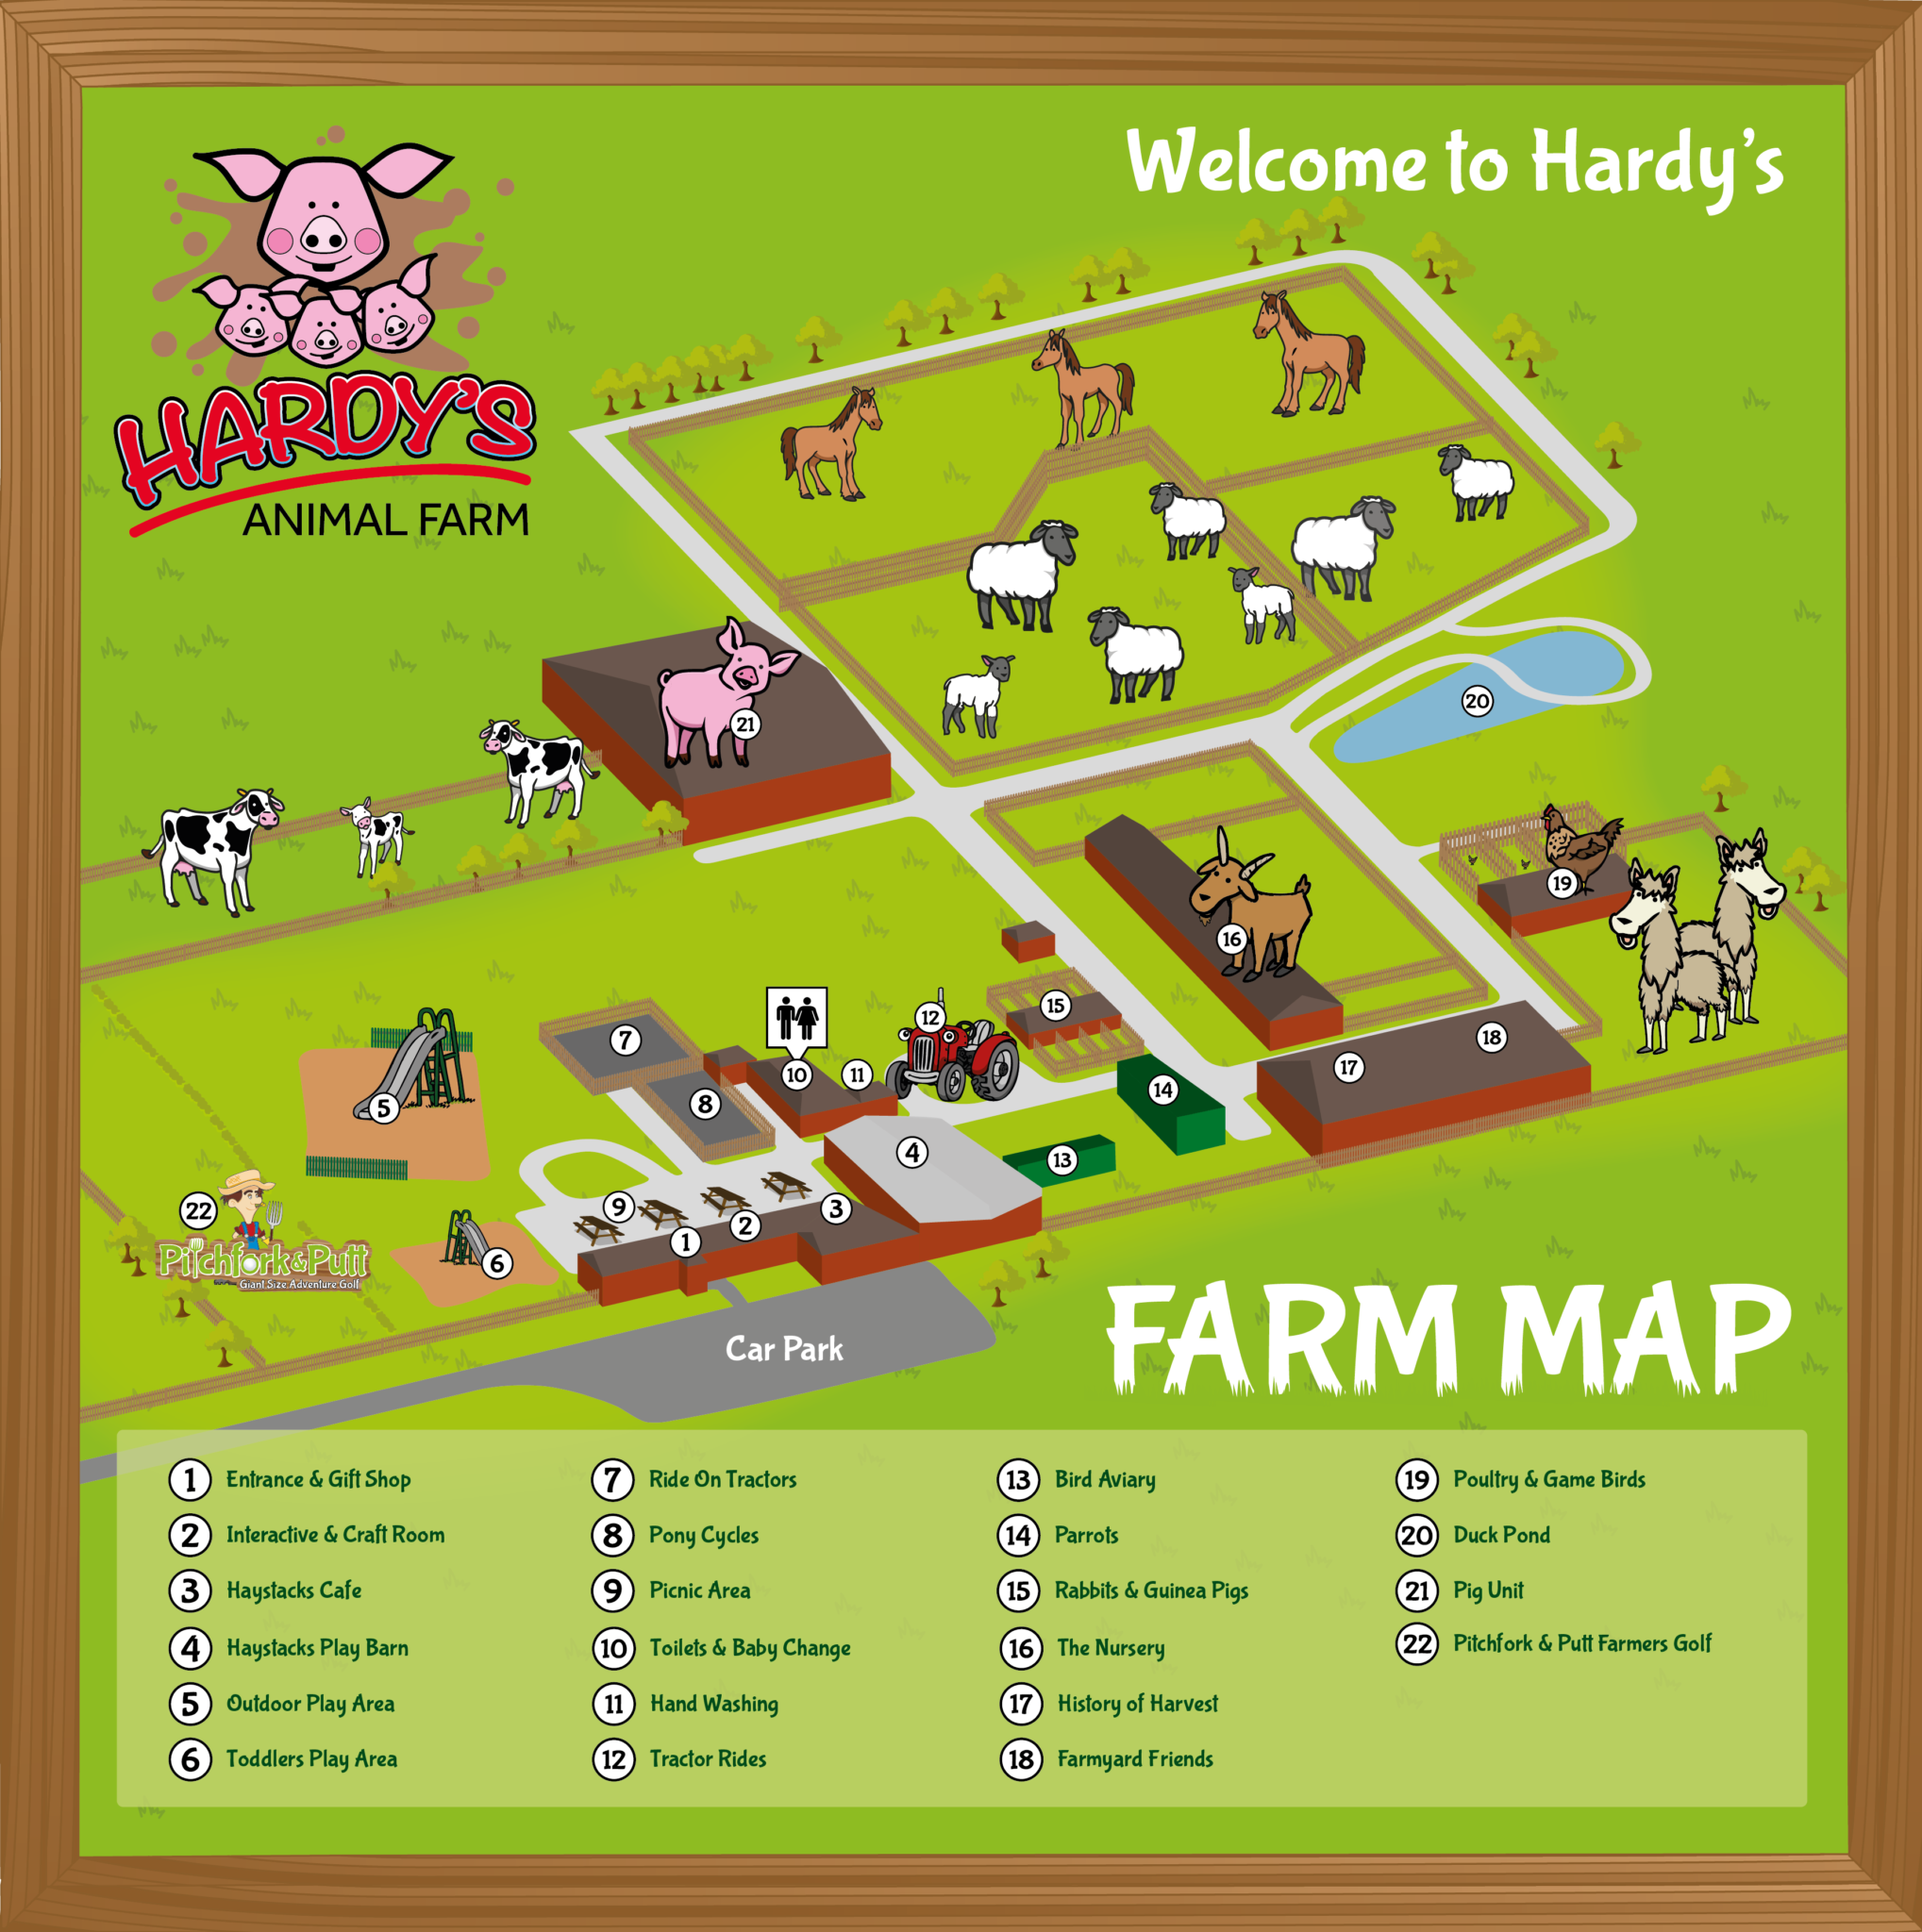 Farm Map - Hardys Animal Farm